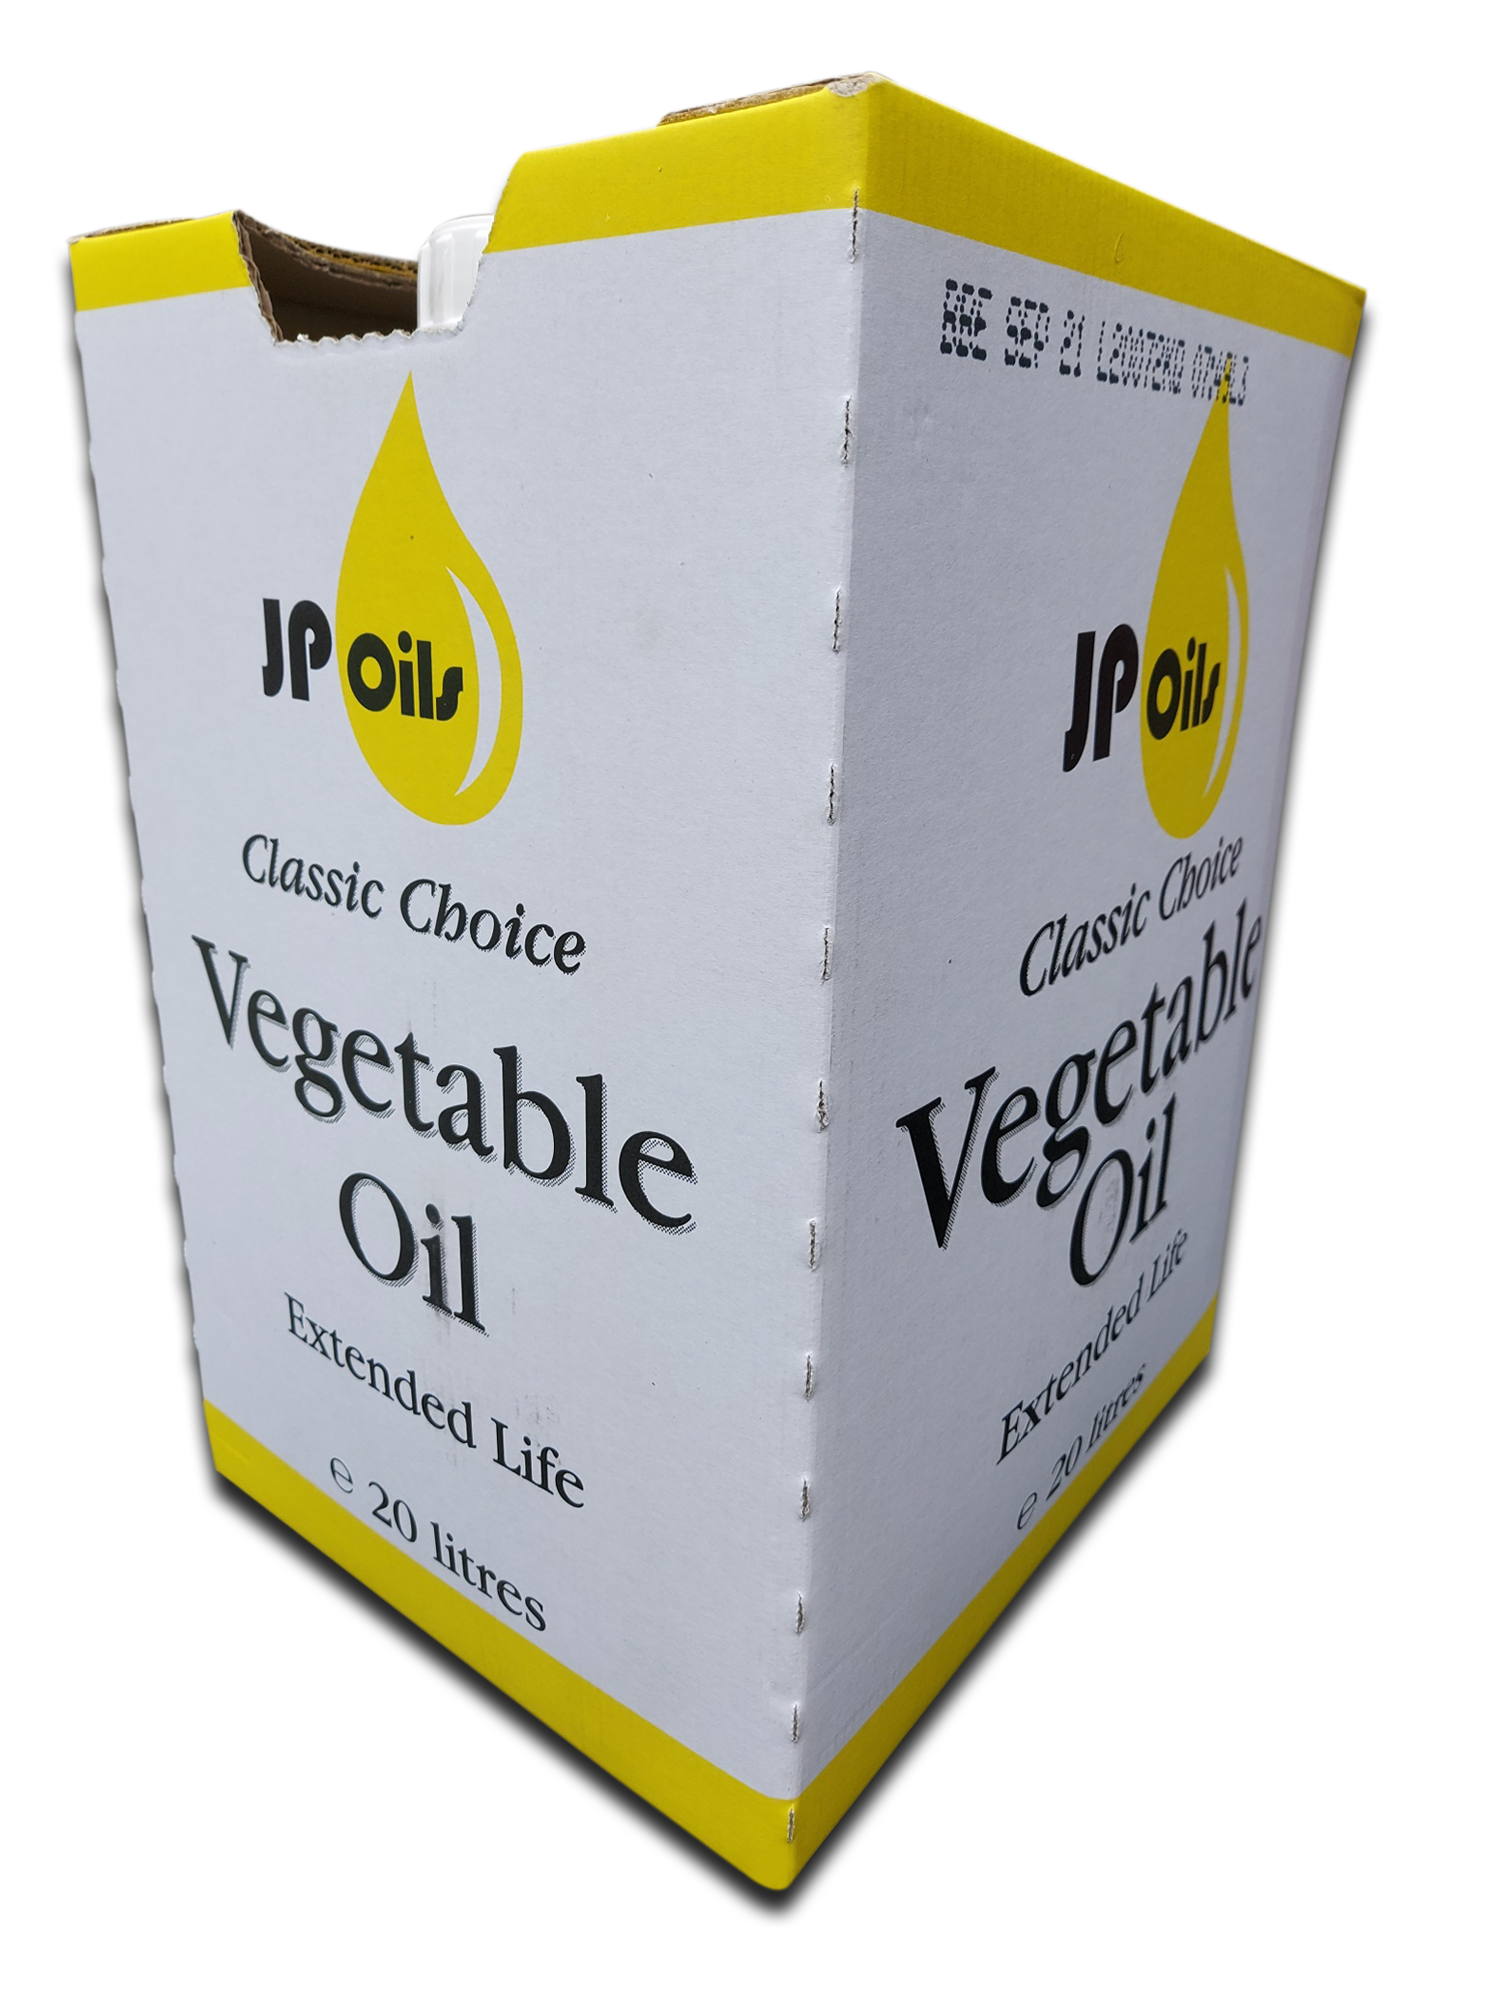 JP Oil Classic Vegetable oil image